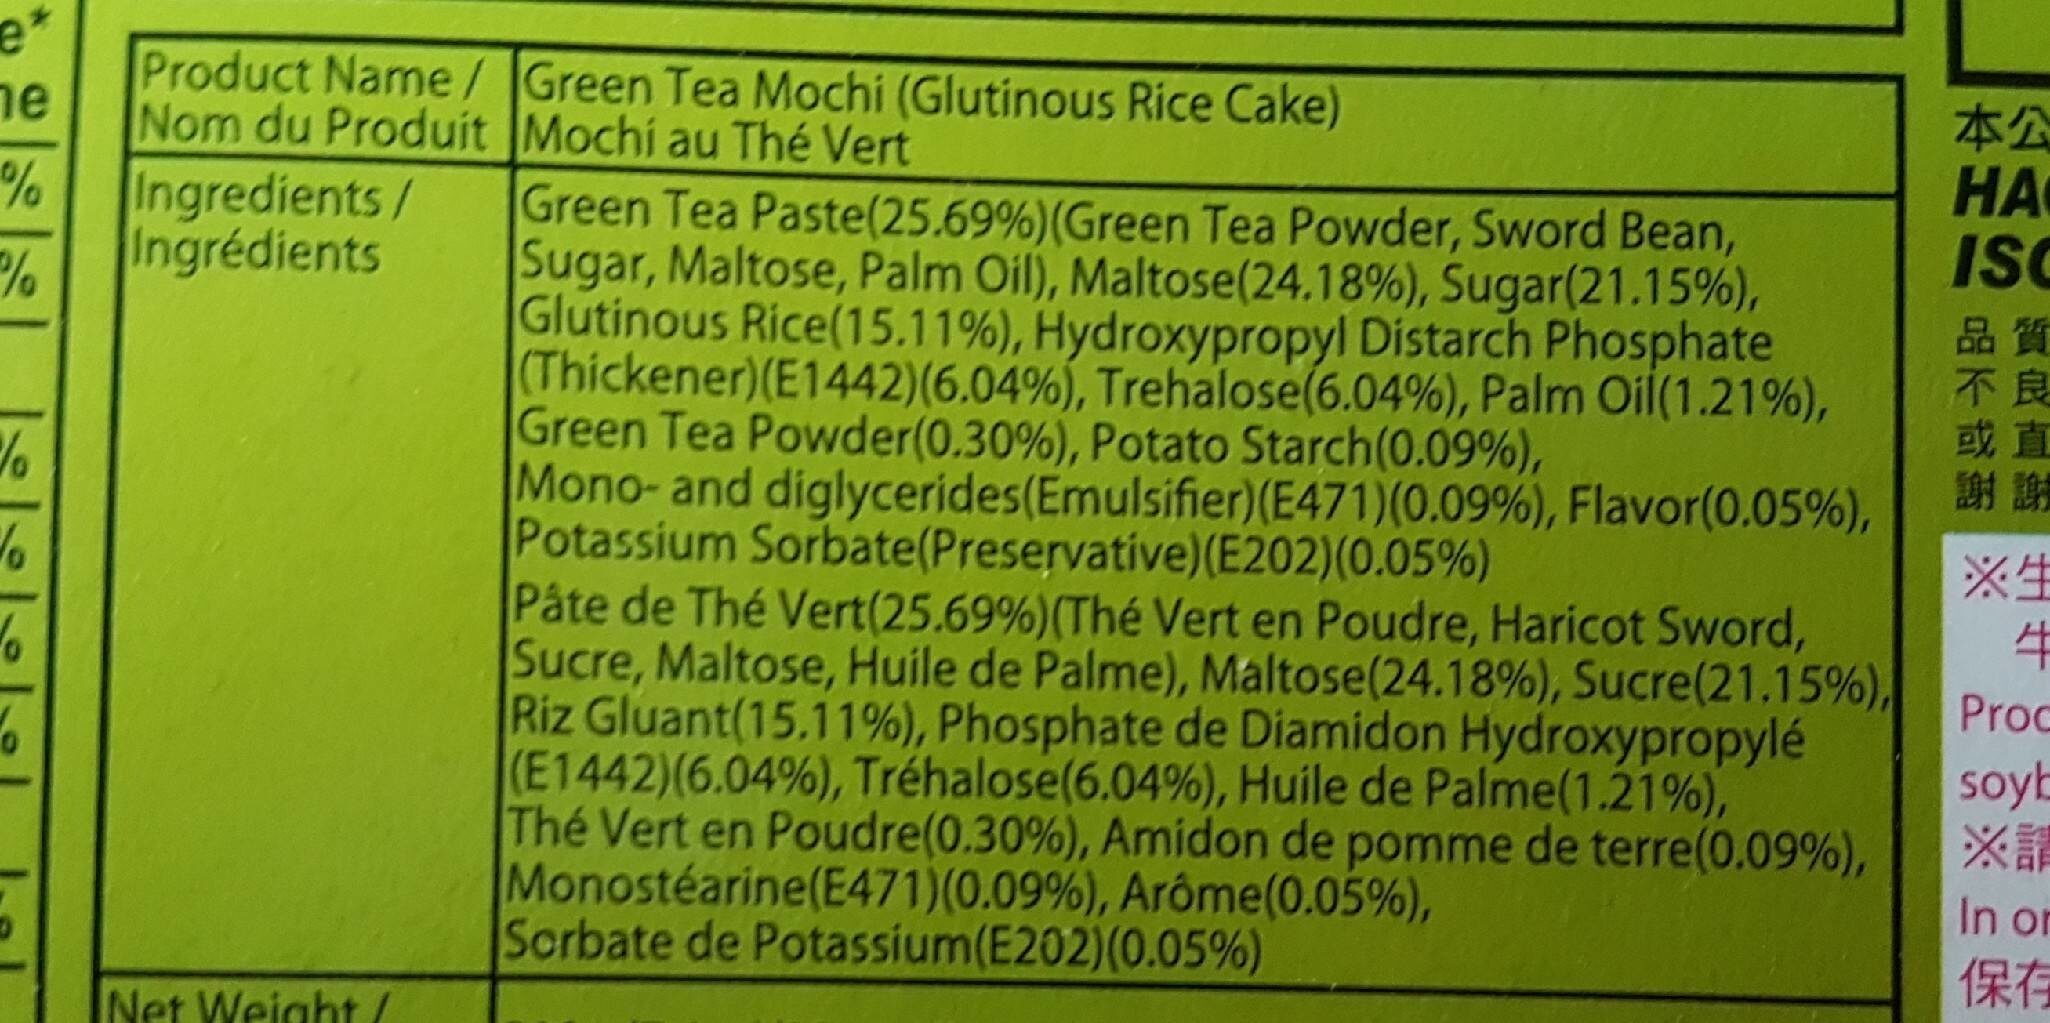 Mochi Thé Vert 210G - Ingredients - fr